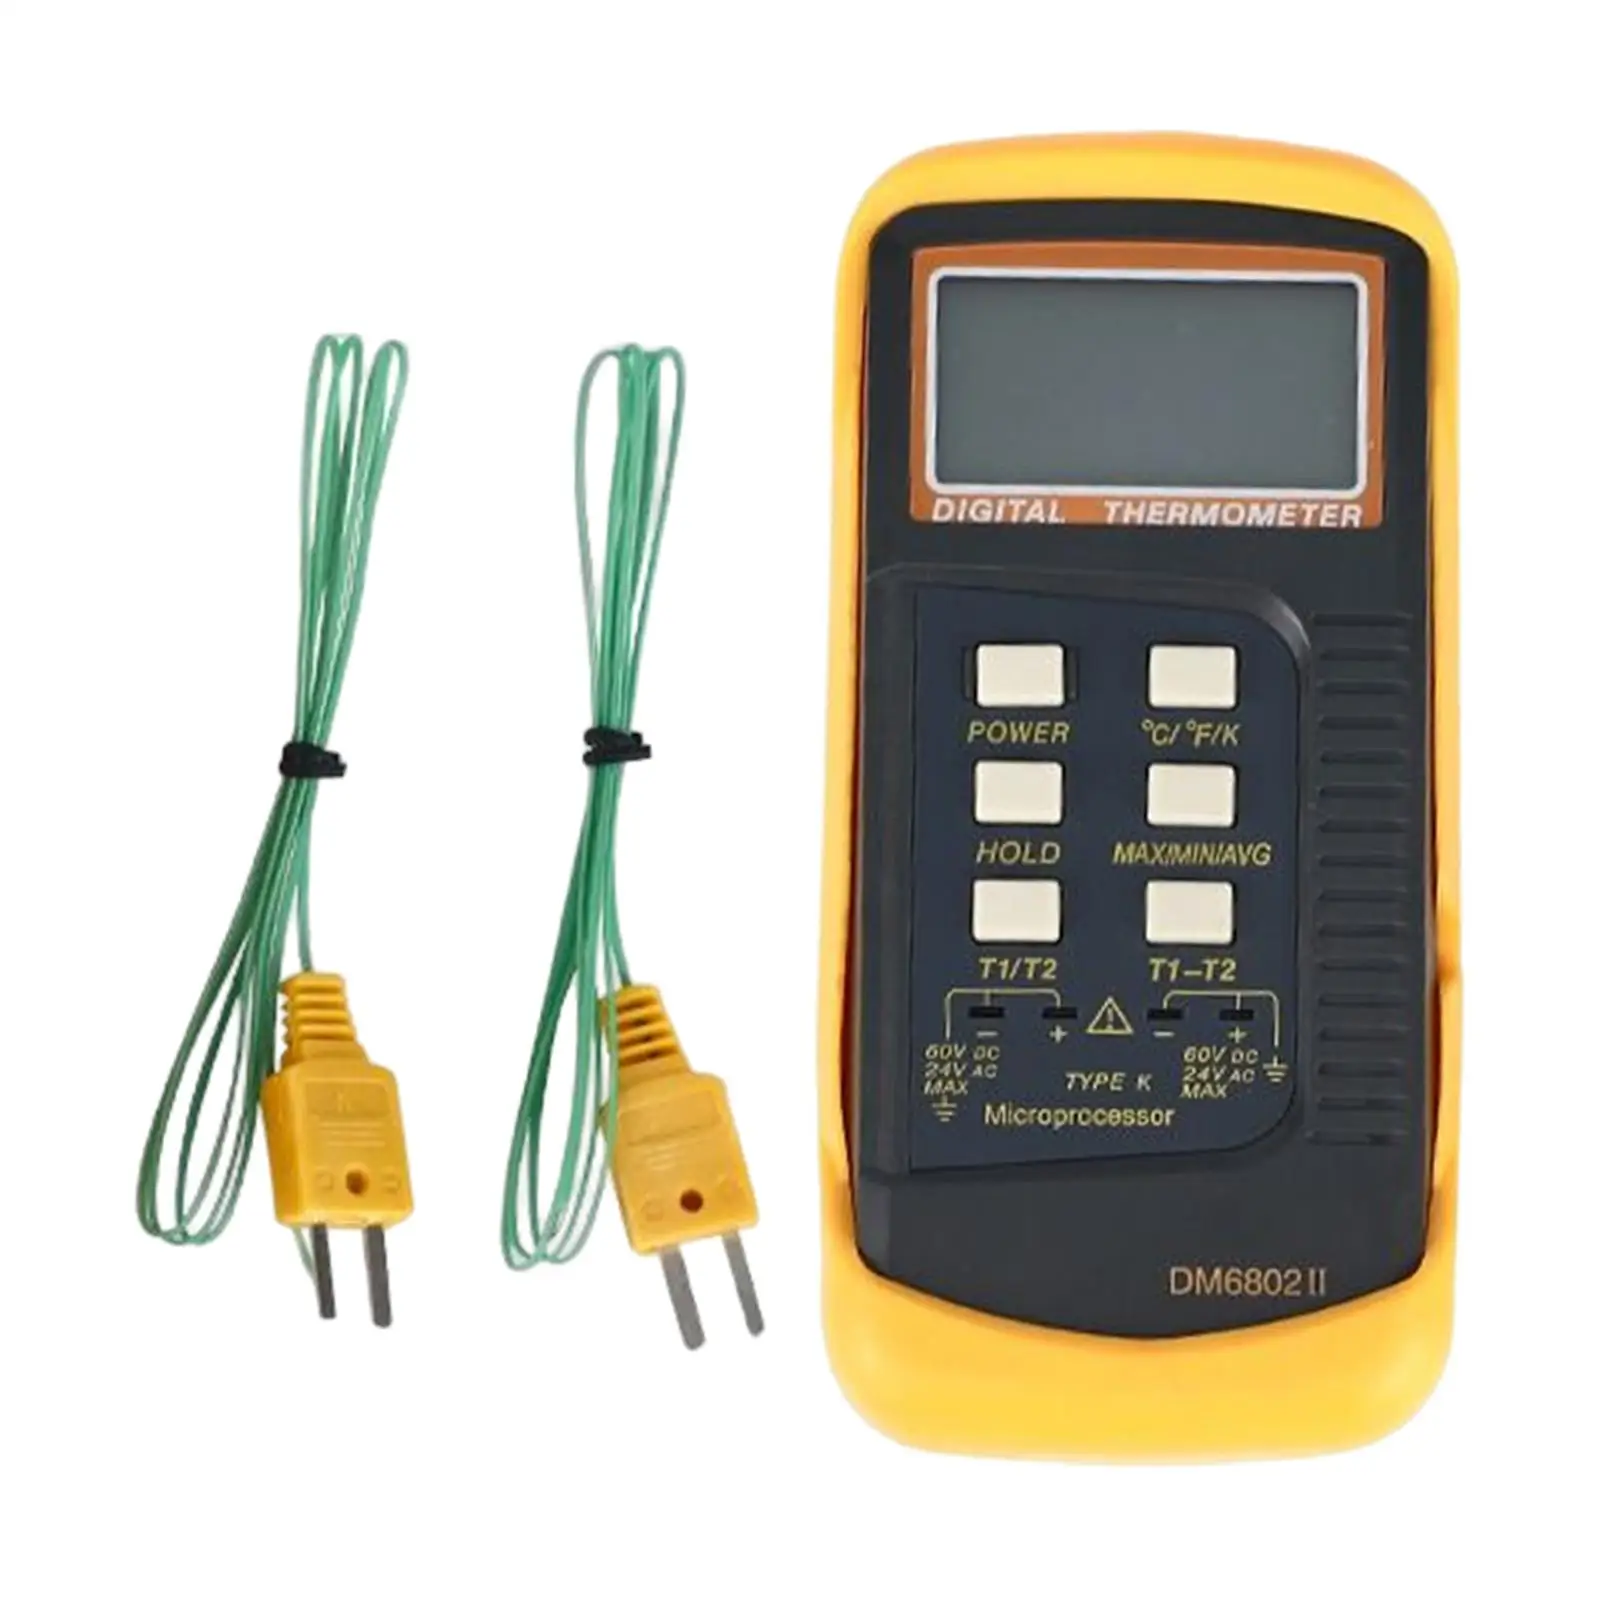 6802II Thermometer Temperature Meter Two Channels Handheld Digital Thermometer Sensor with Pipe Clamp Desktop Measurement Meter